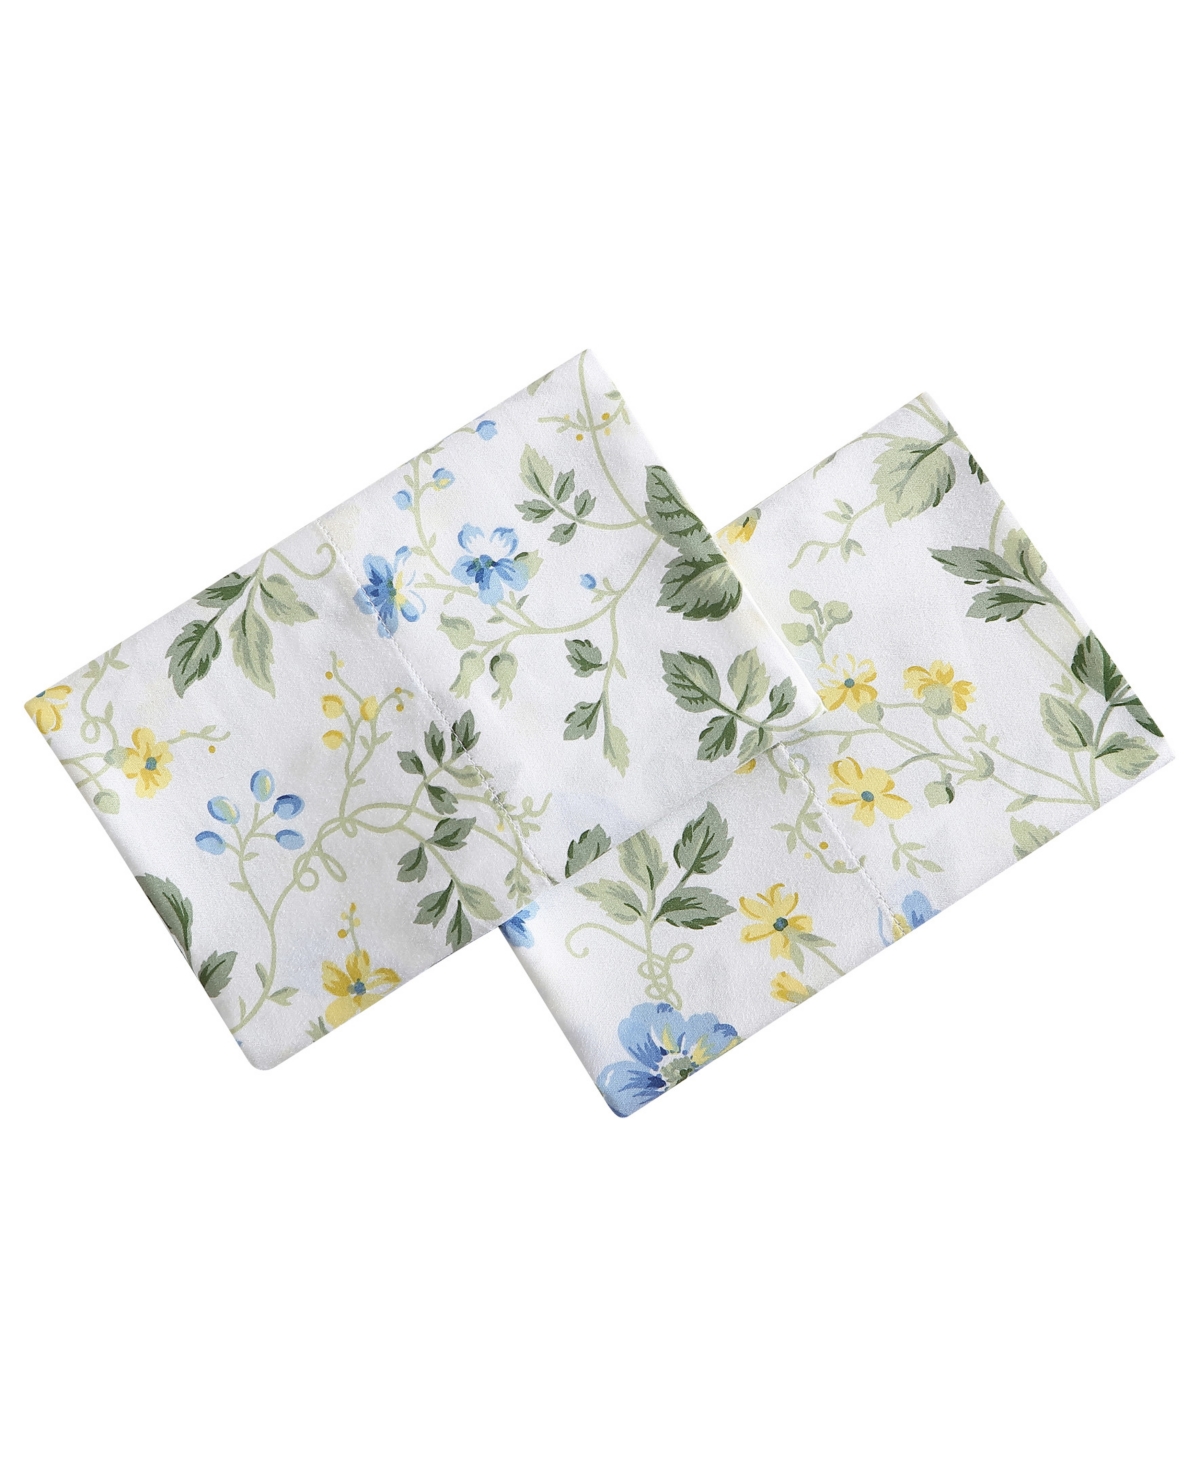 Laura Ashley Meadow Floral Pillowcase Pair, Standard In Sunblue